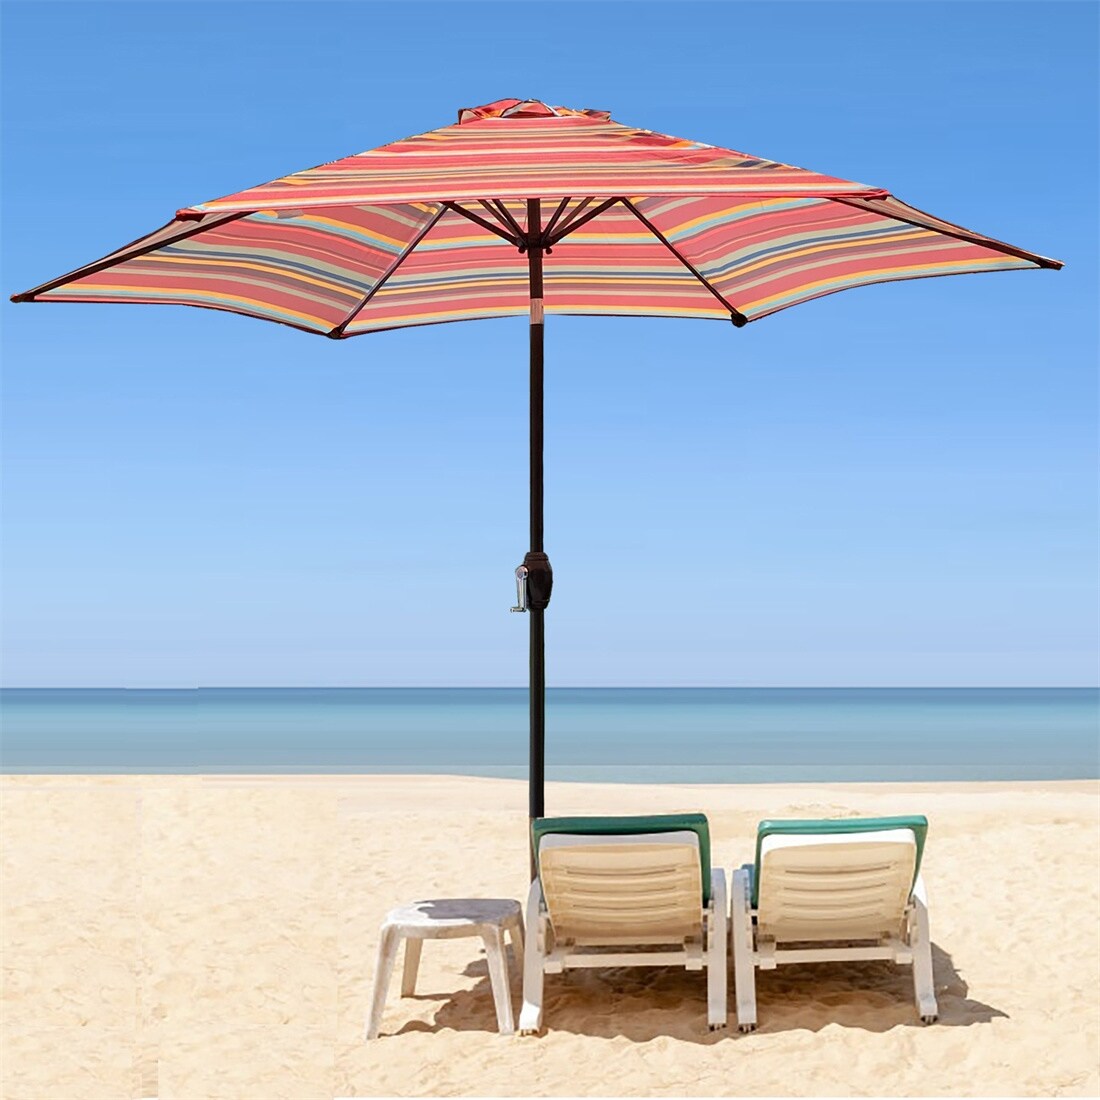 Sunnydaze Decor Beach Umbrella Drink Snack Holder Table, White